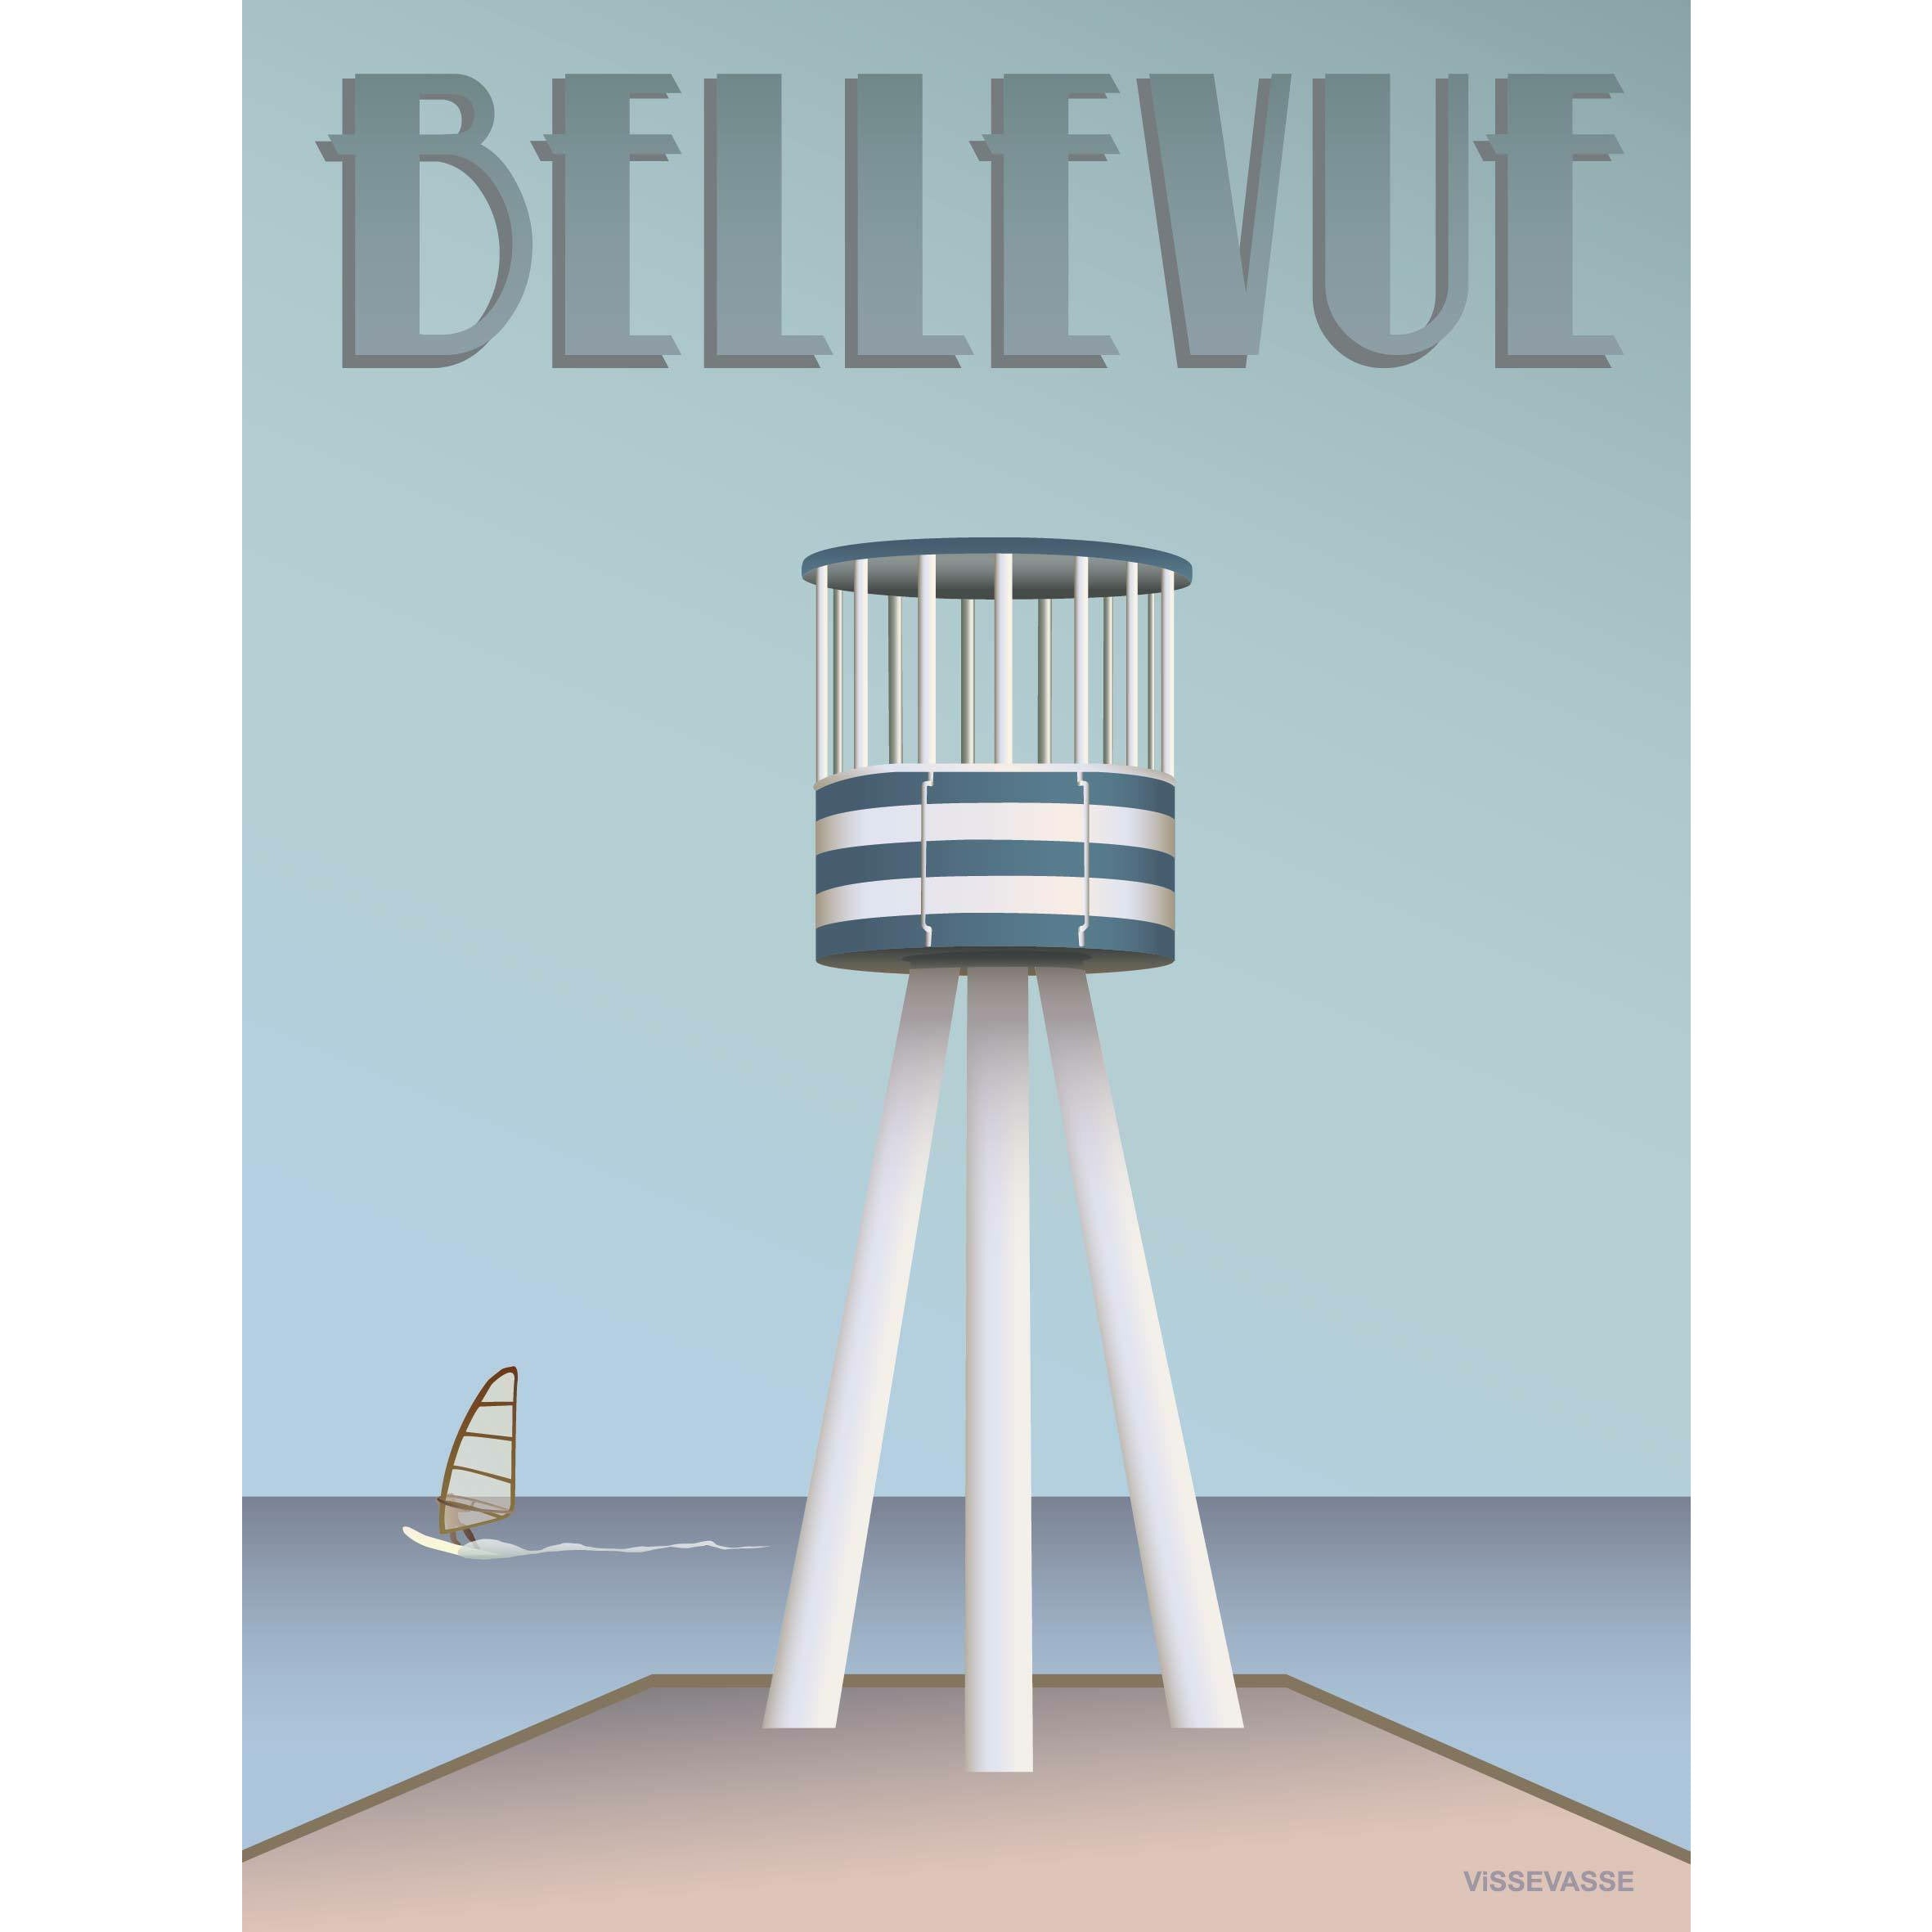 Vissevasse Bellevue Lifeguard Tower plakat, 30 x40 cm